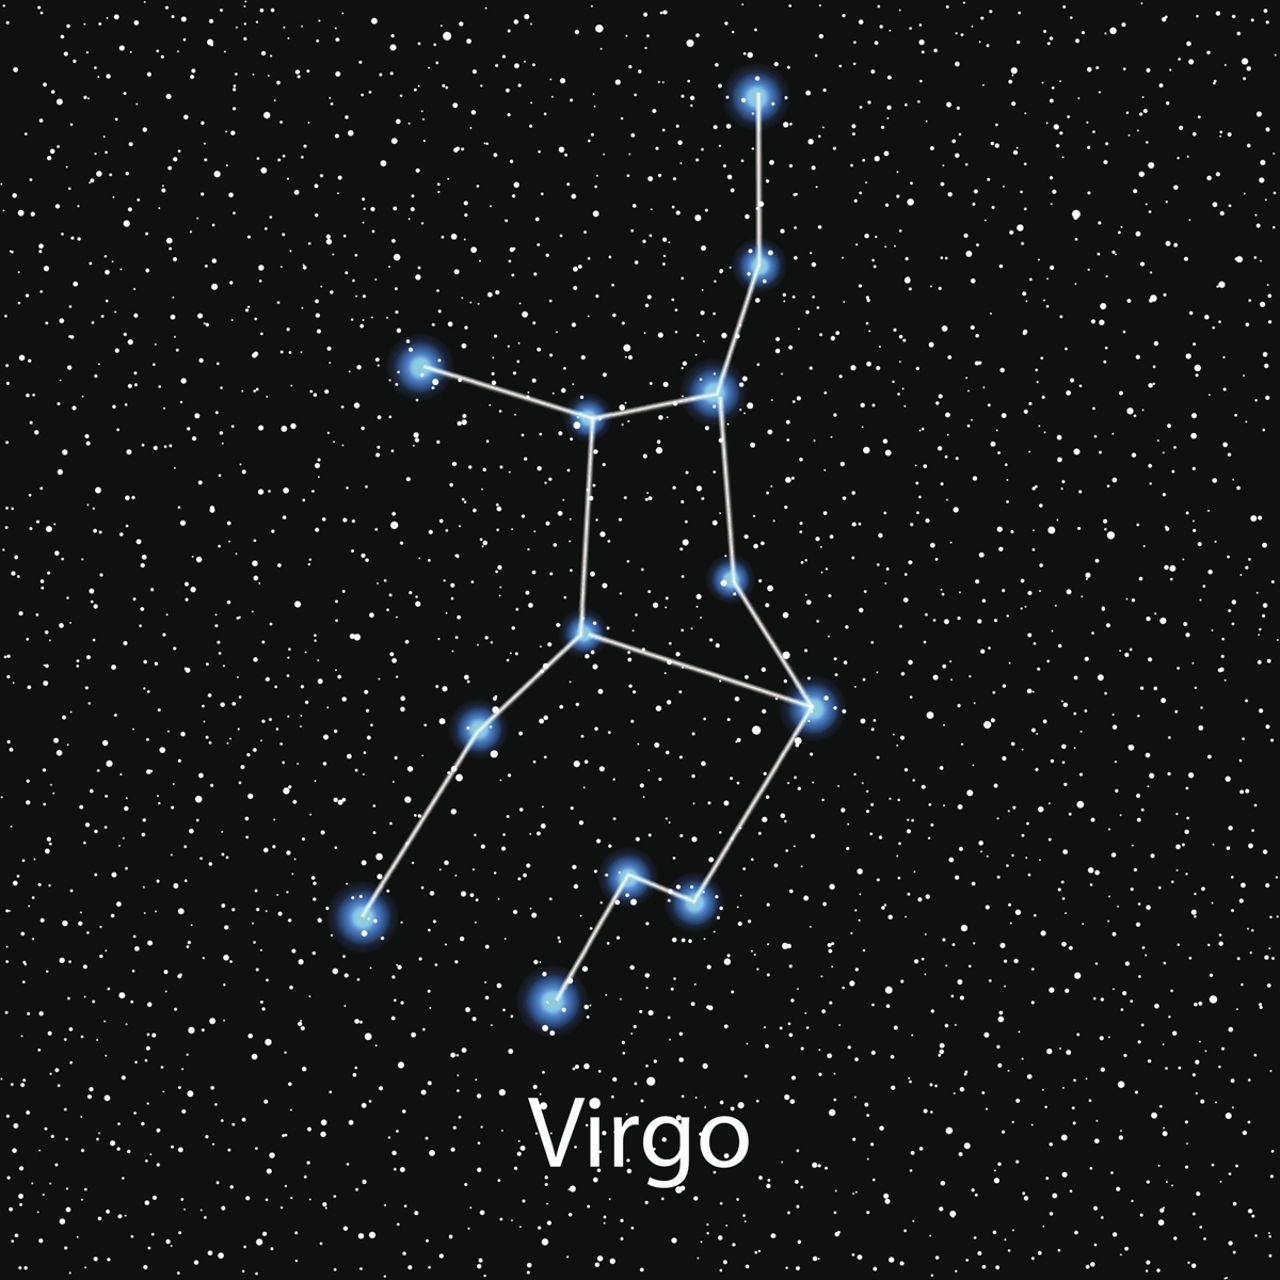 Virgo Constellation Star Names